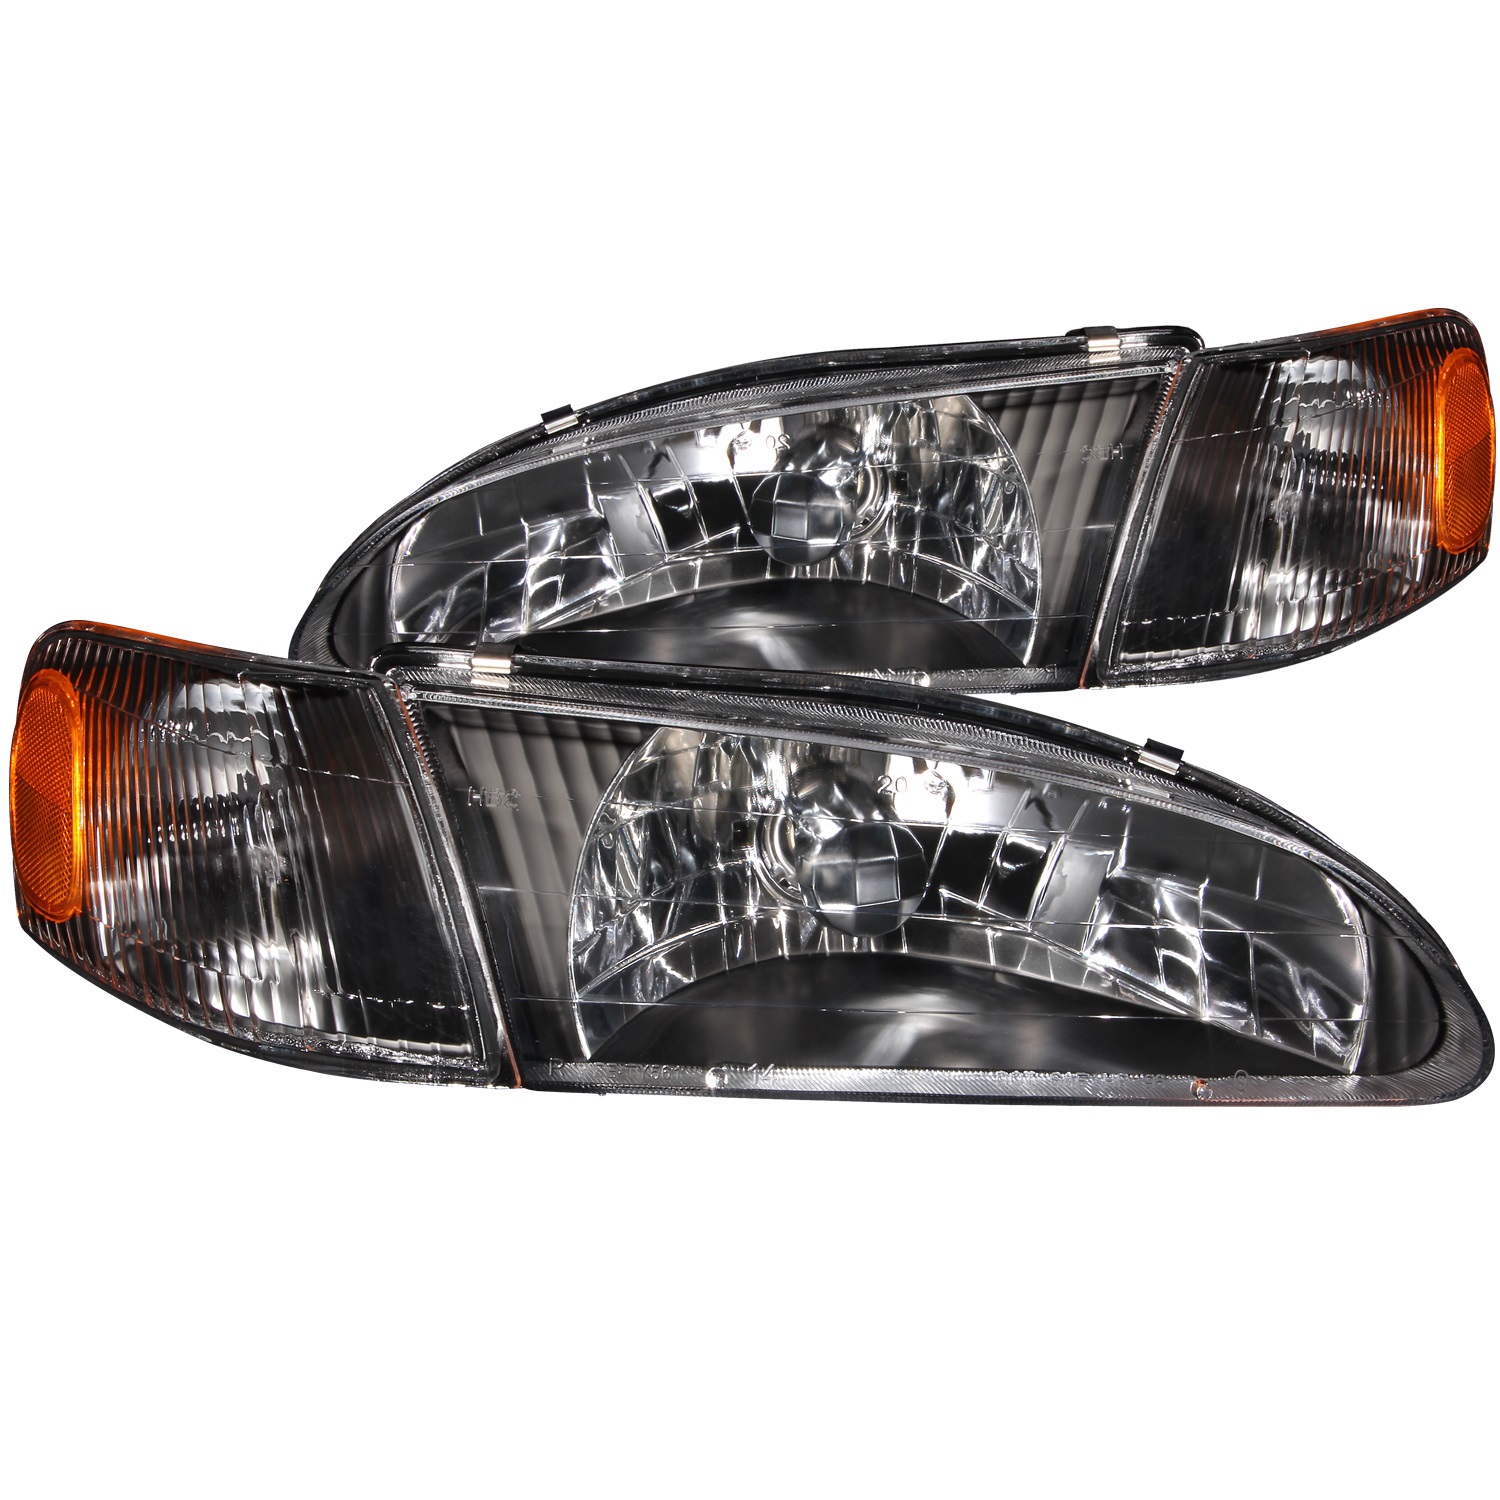 Anzo USA 121131 Crystal Headlight Set Fits 98-00 Corolla